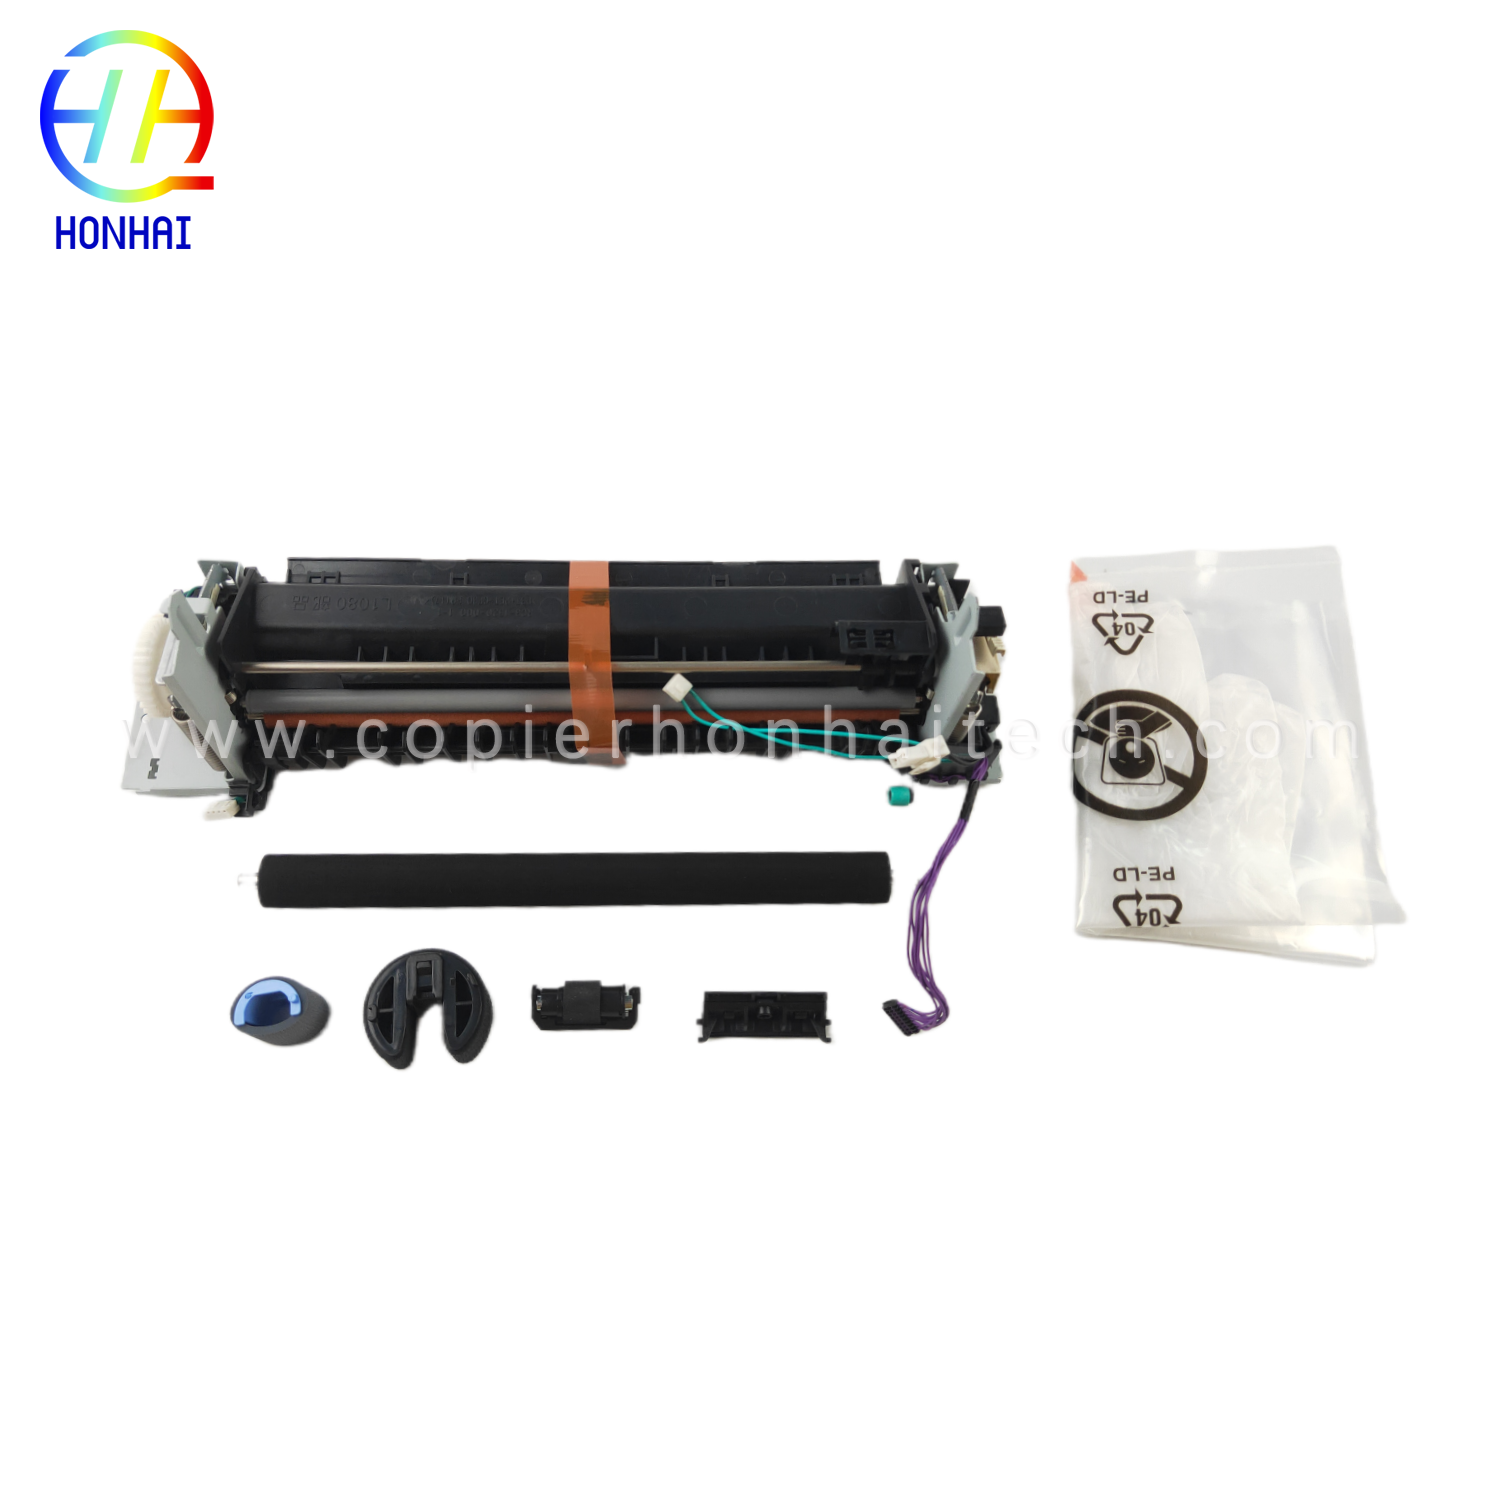 https://www.copierhonhaitech.com/origen-95-new-maintenance-kit-for-hp-laserjet-pro-400-color-mfp-m475dn-product/